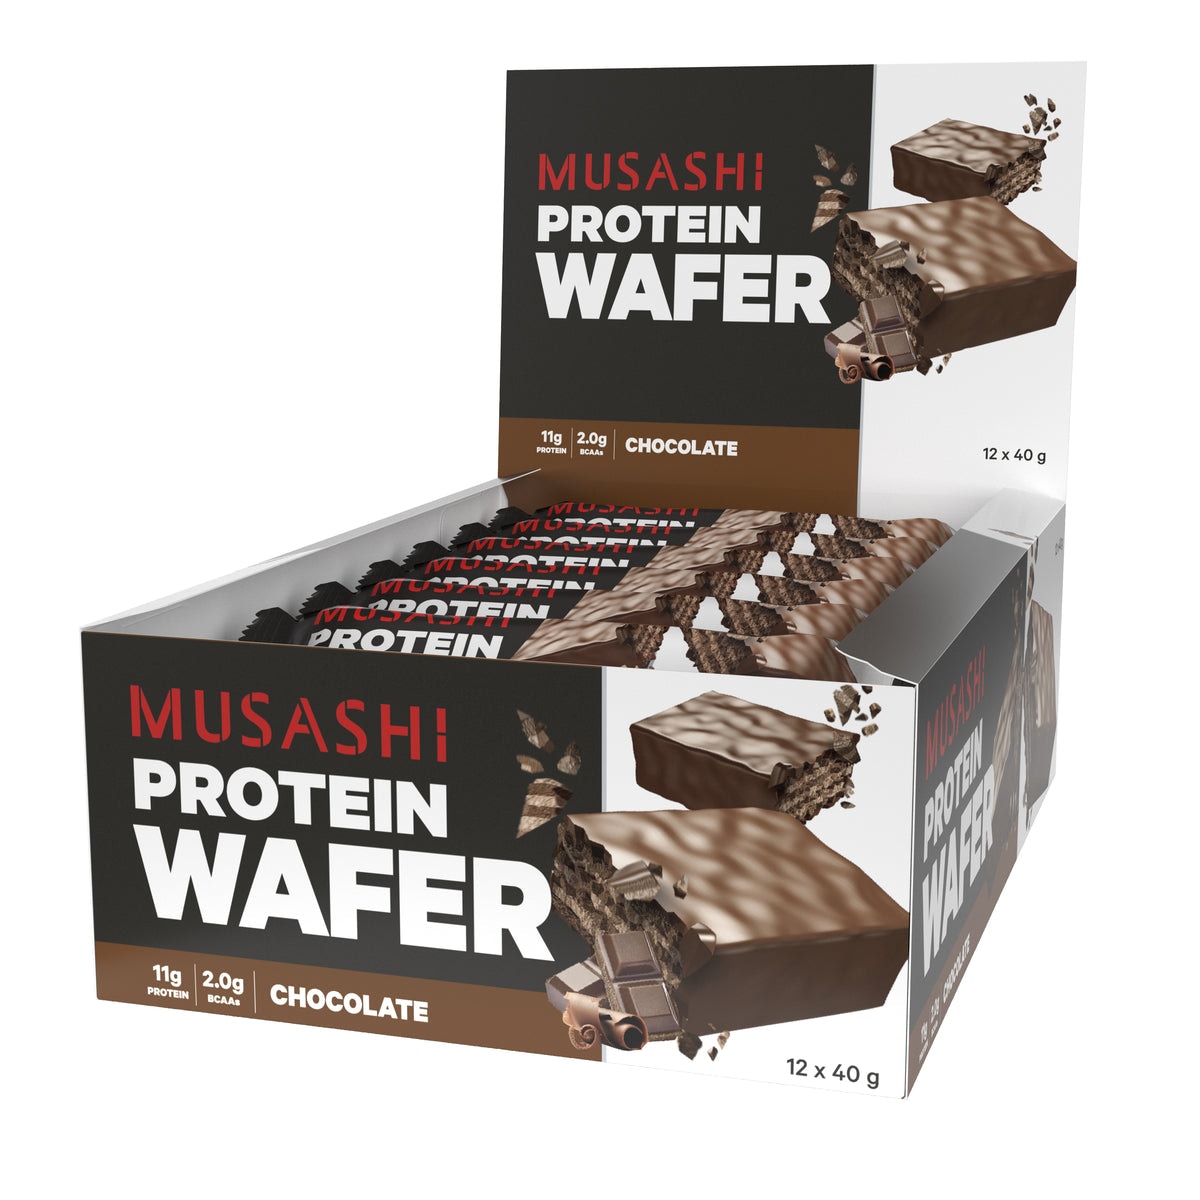 Musashi Chocolate Protein Wafer 12 x 40g Australia